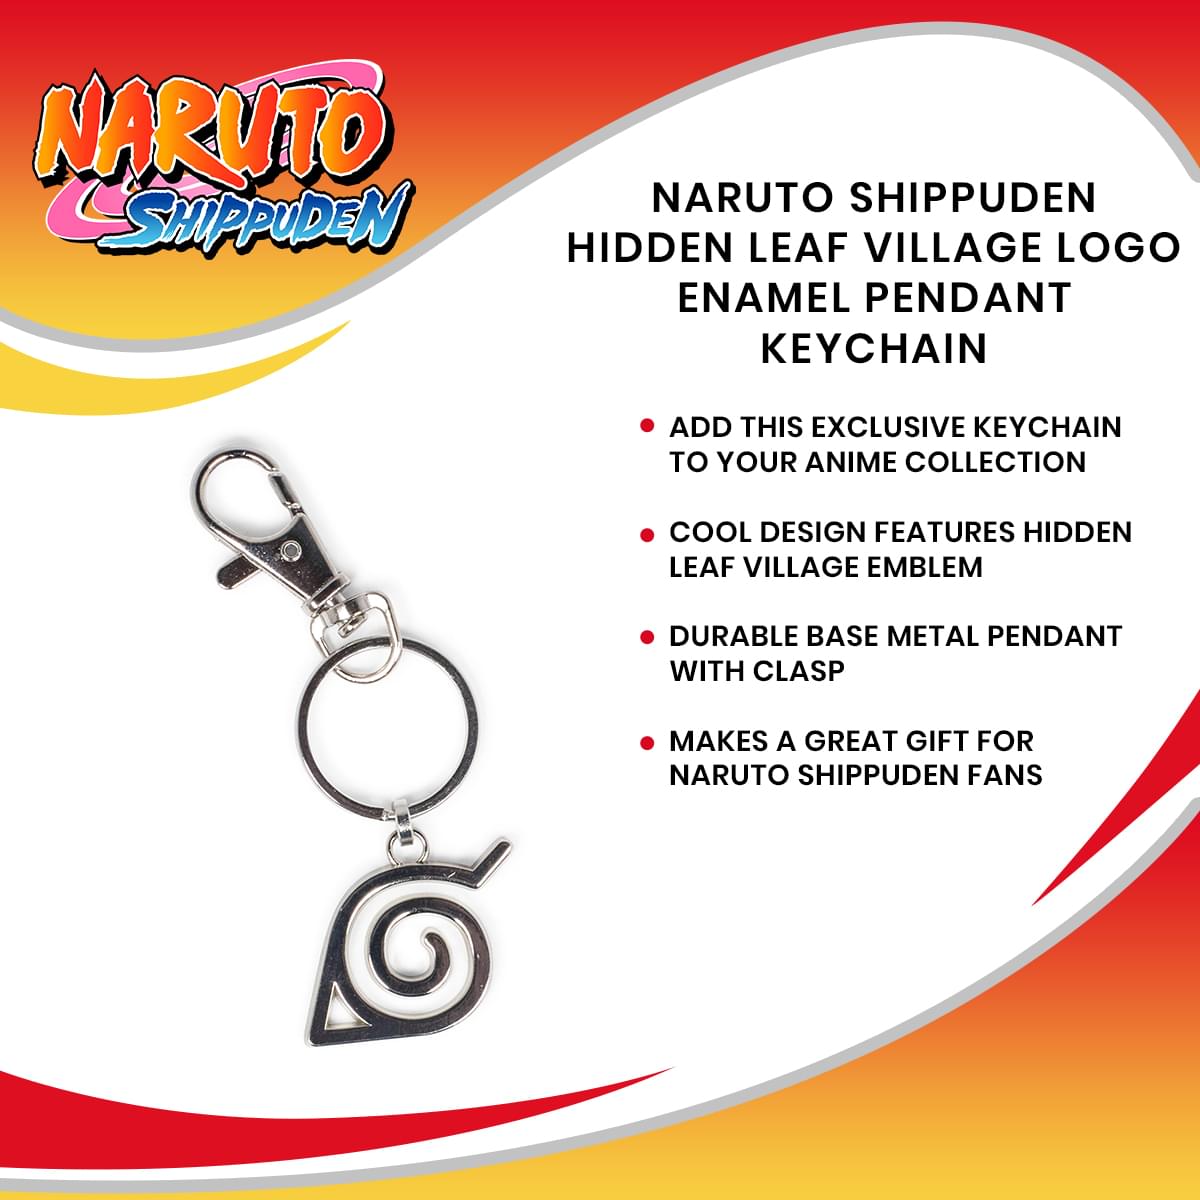 Naruto Shippuden Hidden Leaf Village Logo Enamel Pendant Keychain